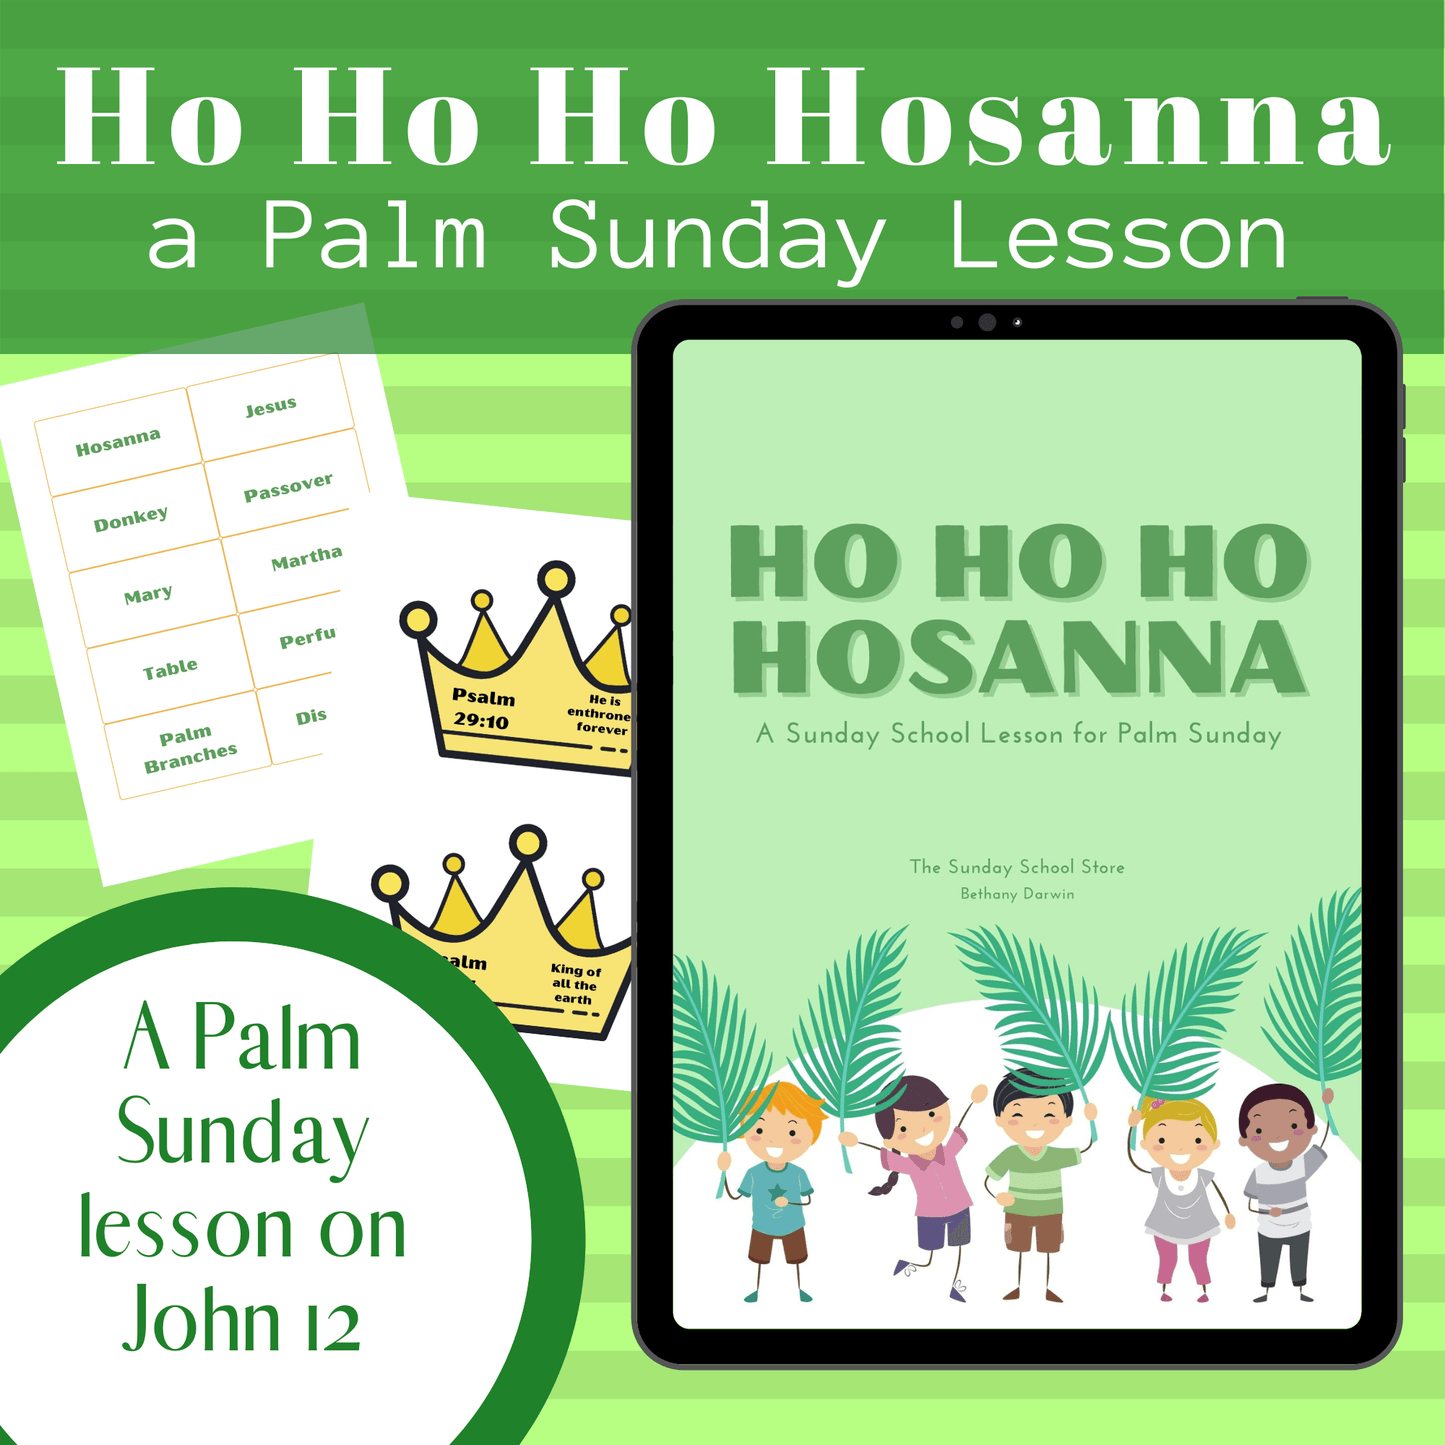 Ho Ho Hosanna: Palm Sunday Lesson (download only) - Sunday School Store 